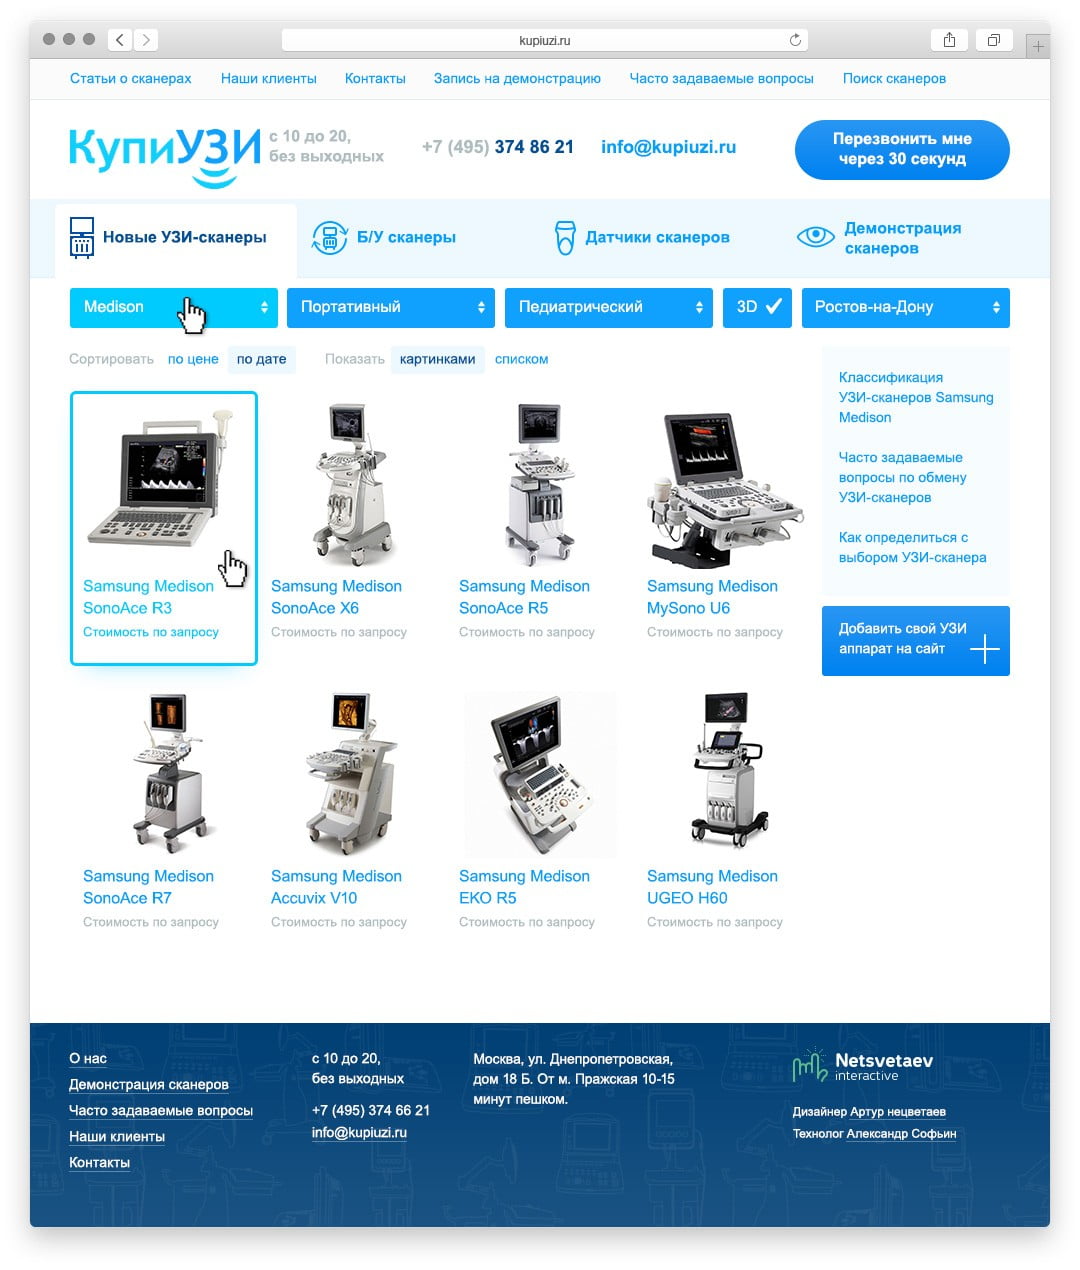 Третья версия Kupiuzi.ru Artur Netsvetaev UI Designer & Product Manager: websites, apps, prototypes and interface design browser catalog